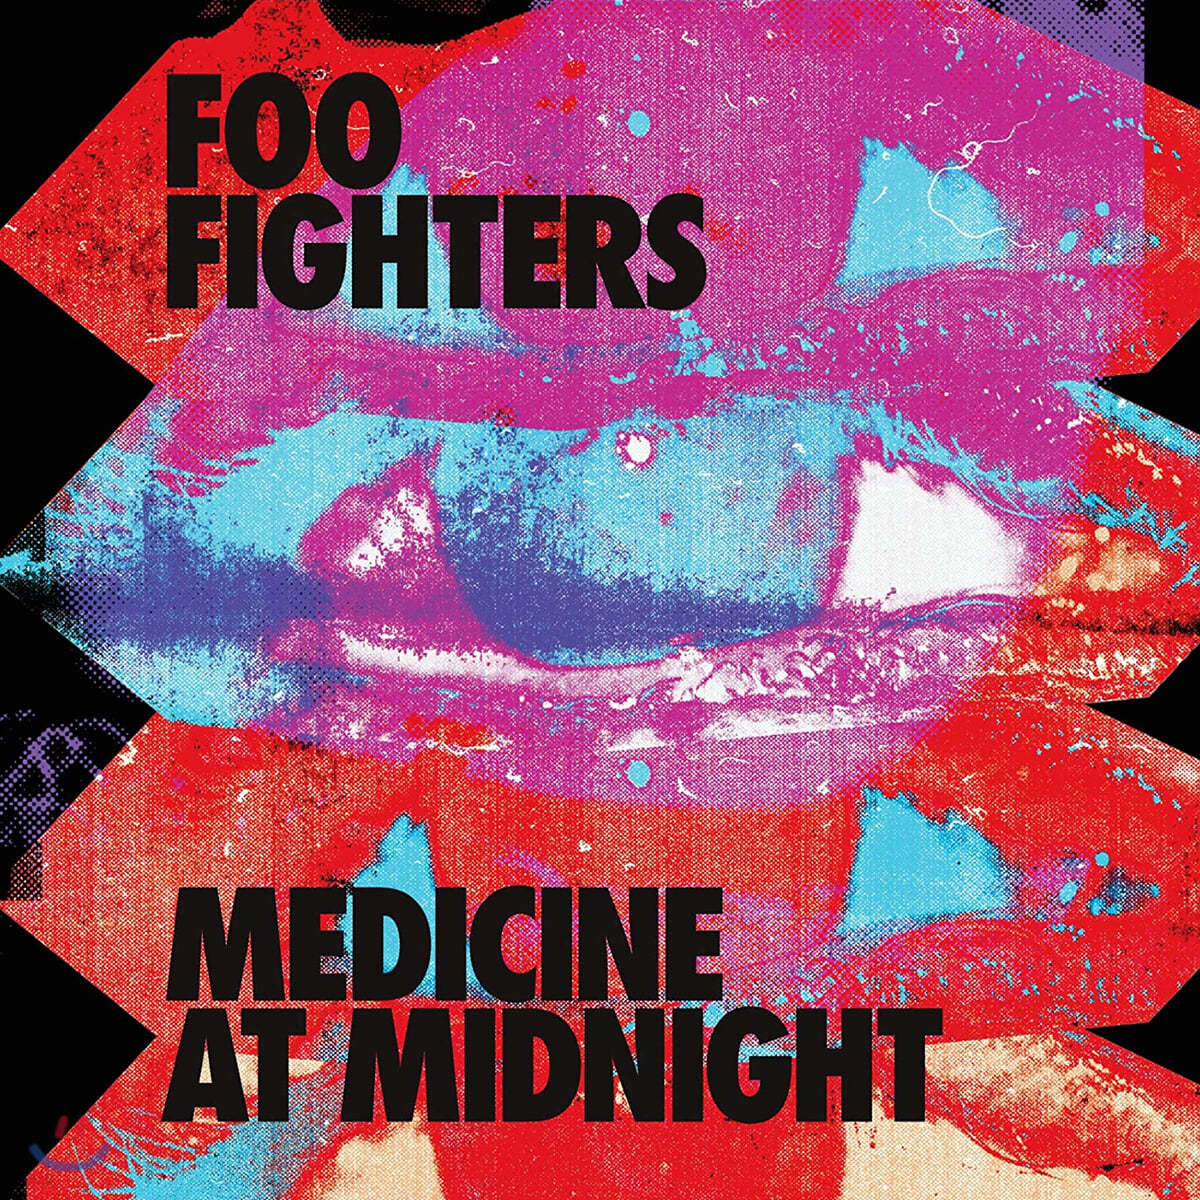 Foo Fighters (푸 파이터스) - 10집 Medicine at Midnight [투명 오렌지 컬러 LP] 